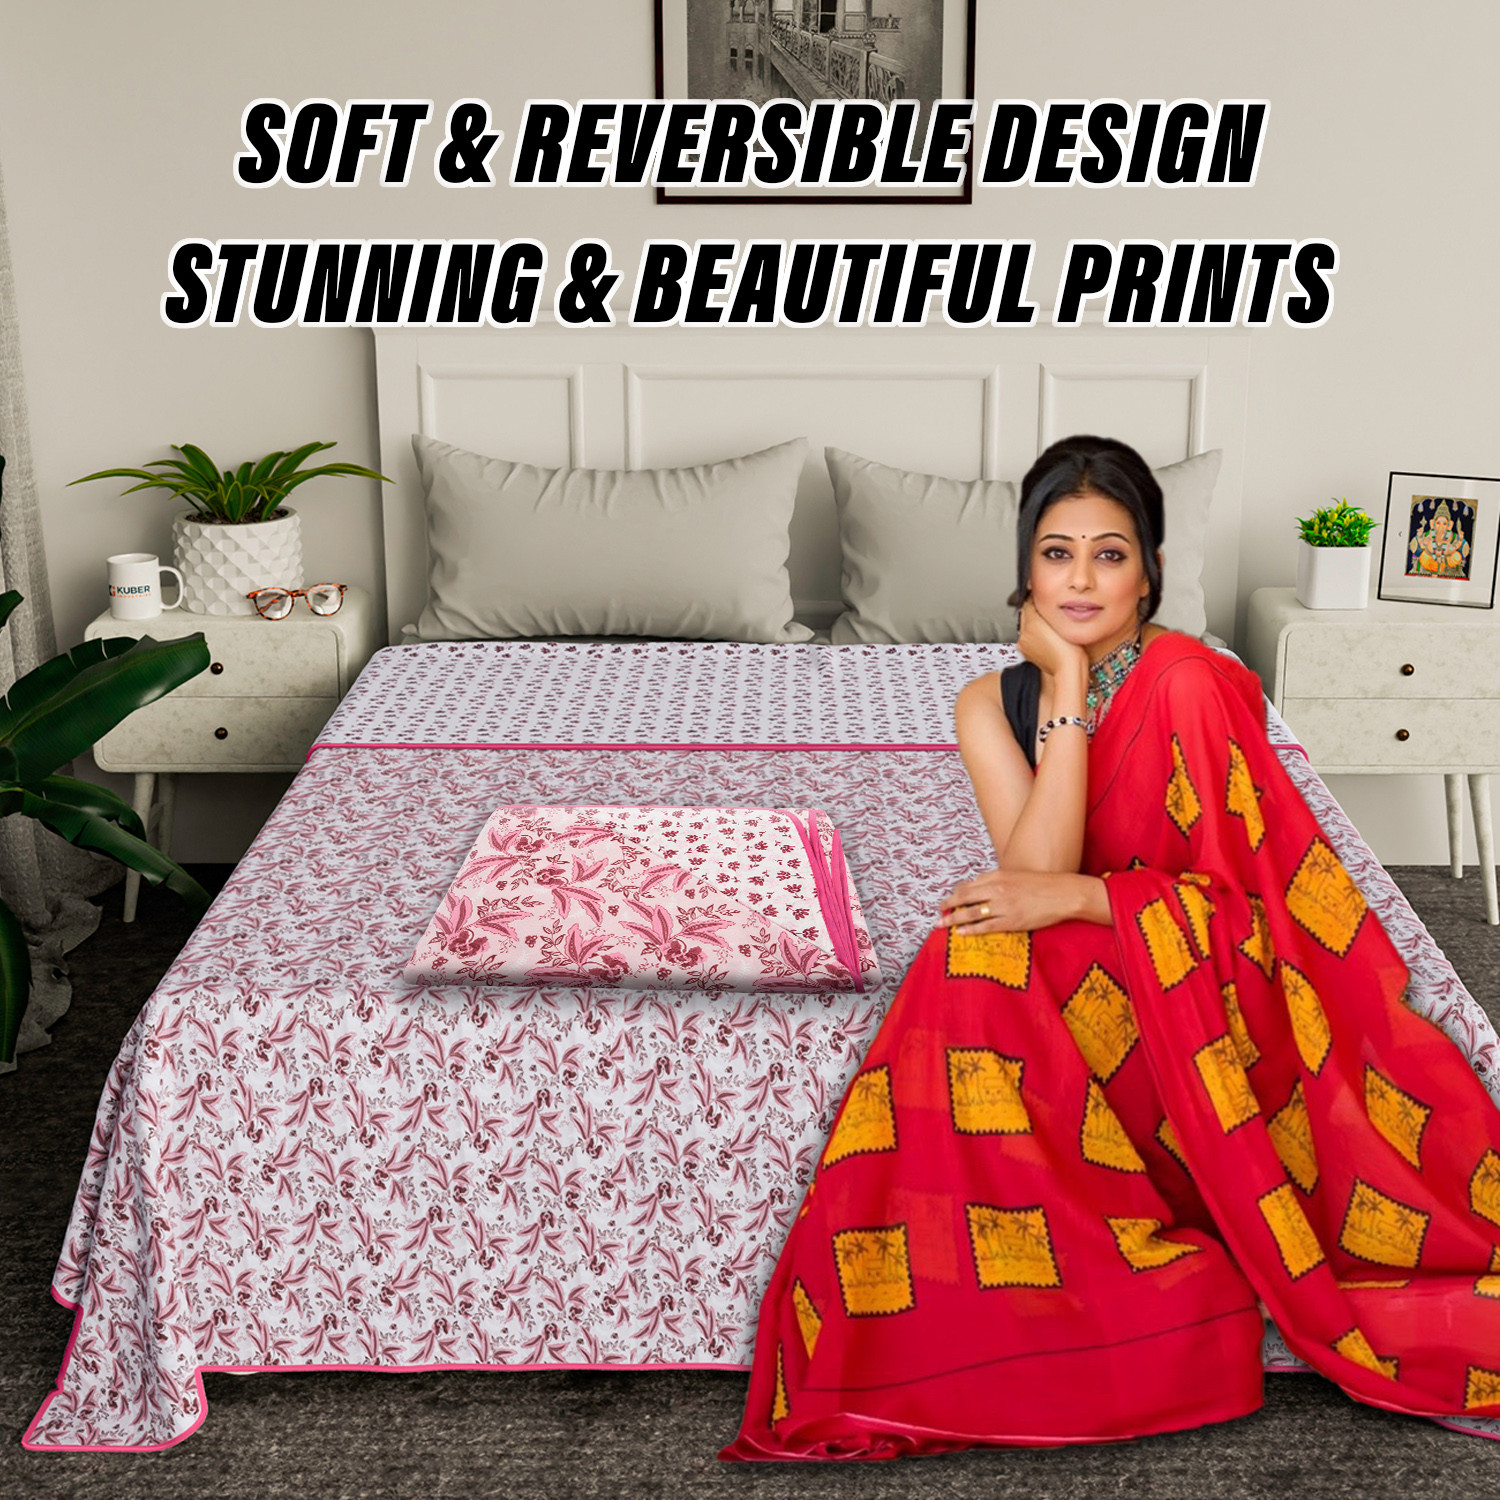 Kuber Industries Blanket | Cotton Double Bed Dohar | Blanket For Home | Reversible AC Blanket For Travelling | Blanket For Summer | Blanket For Winters | Flower Print | Pink